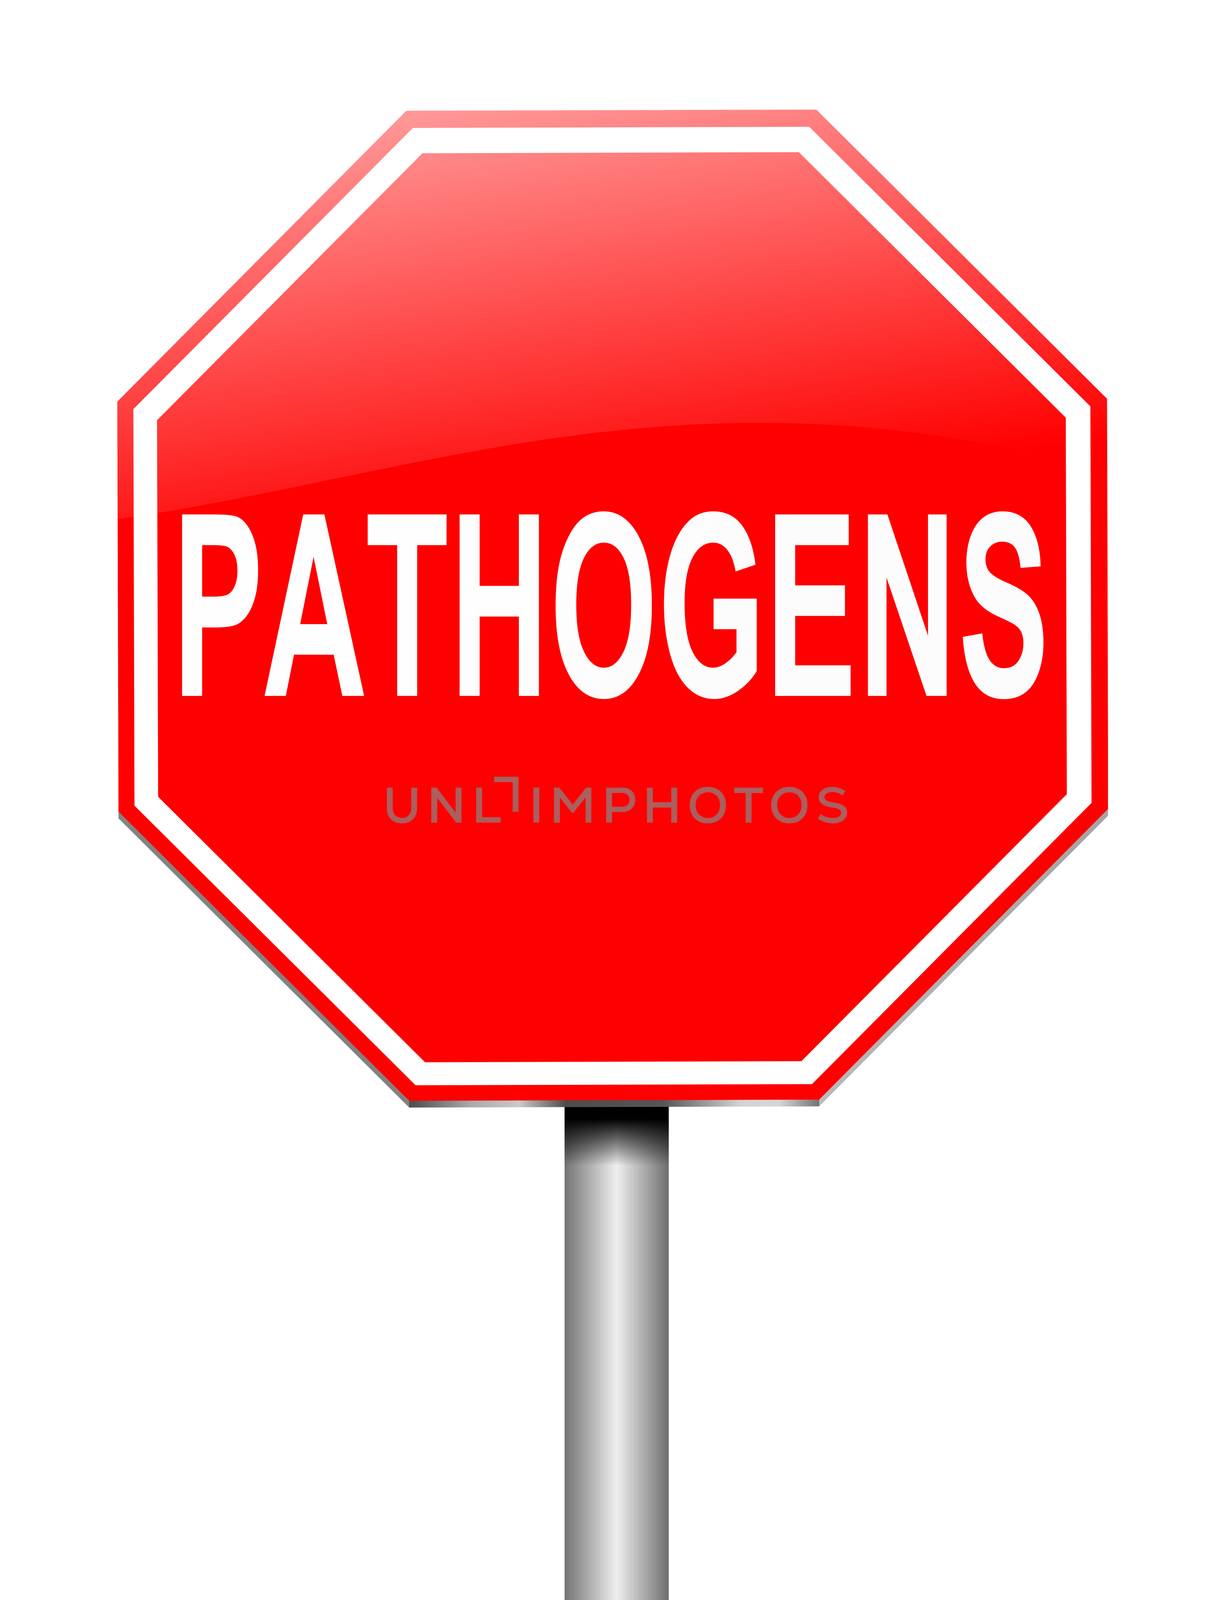 Pathogens concept. by 72soul